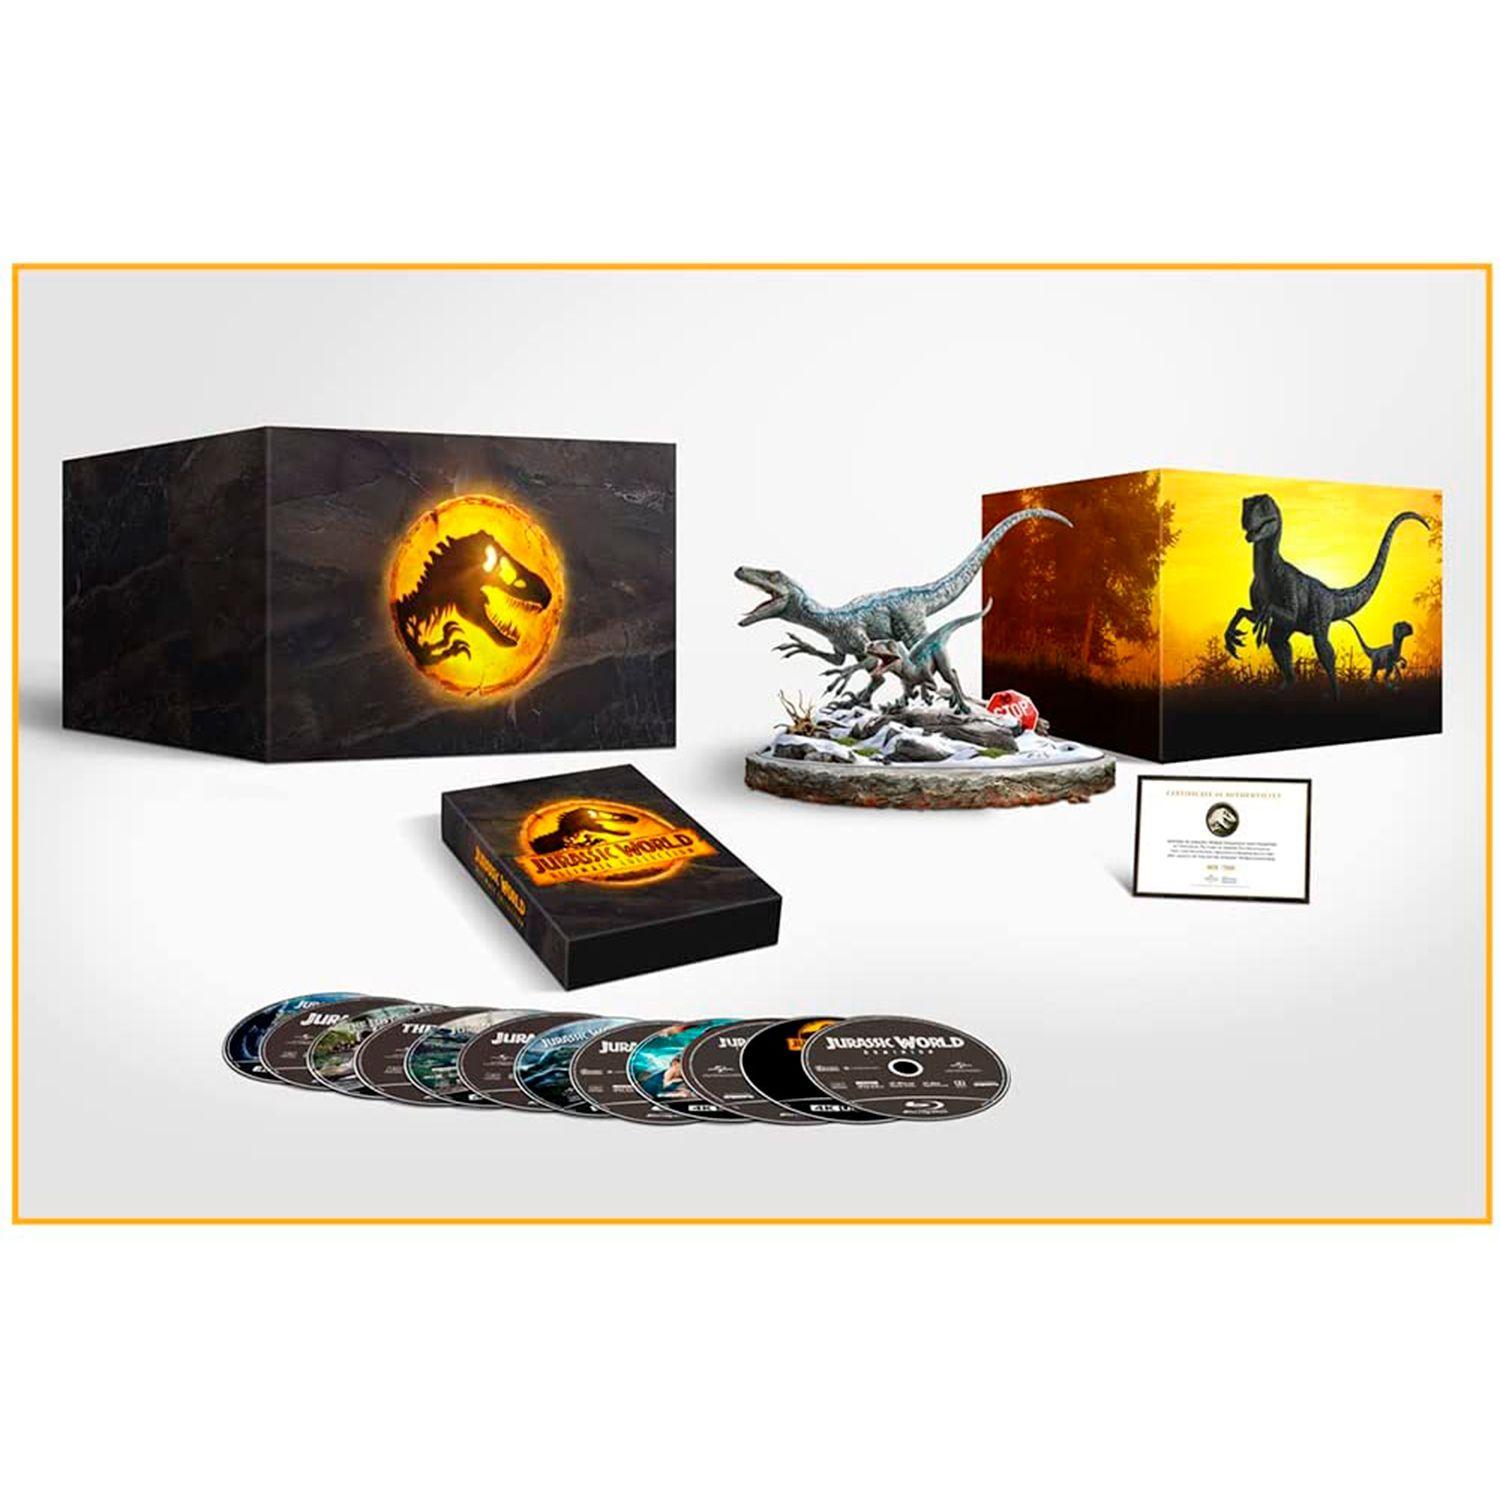 Мир Юрского периода: Полная коллекция (4K UHD + Blu-ray) Box Set Limited Edition Figurine